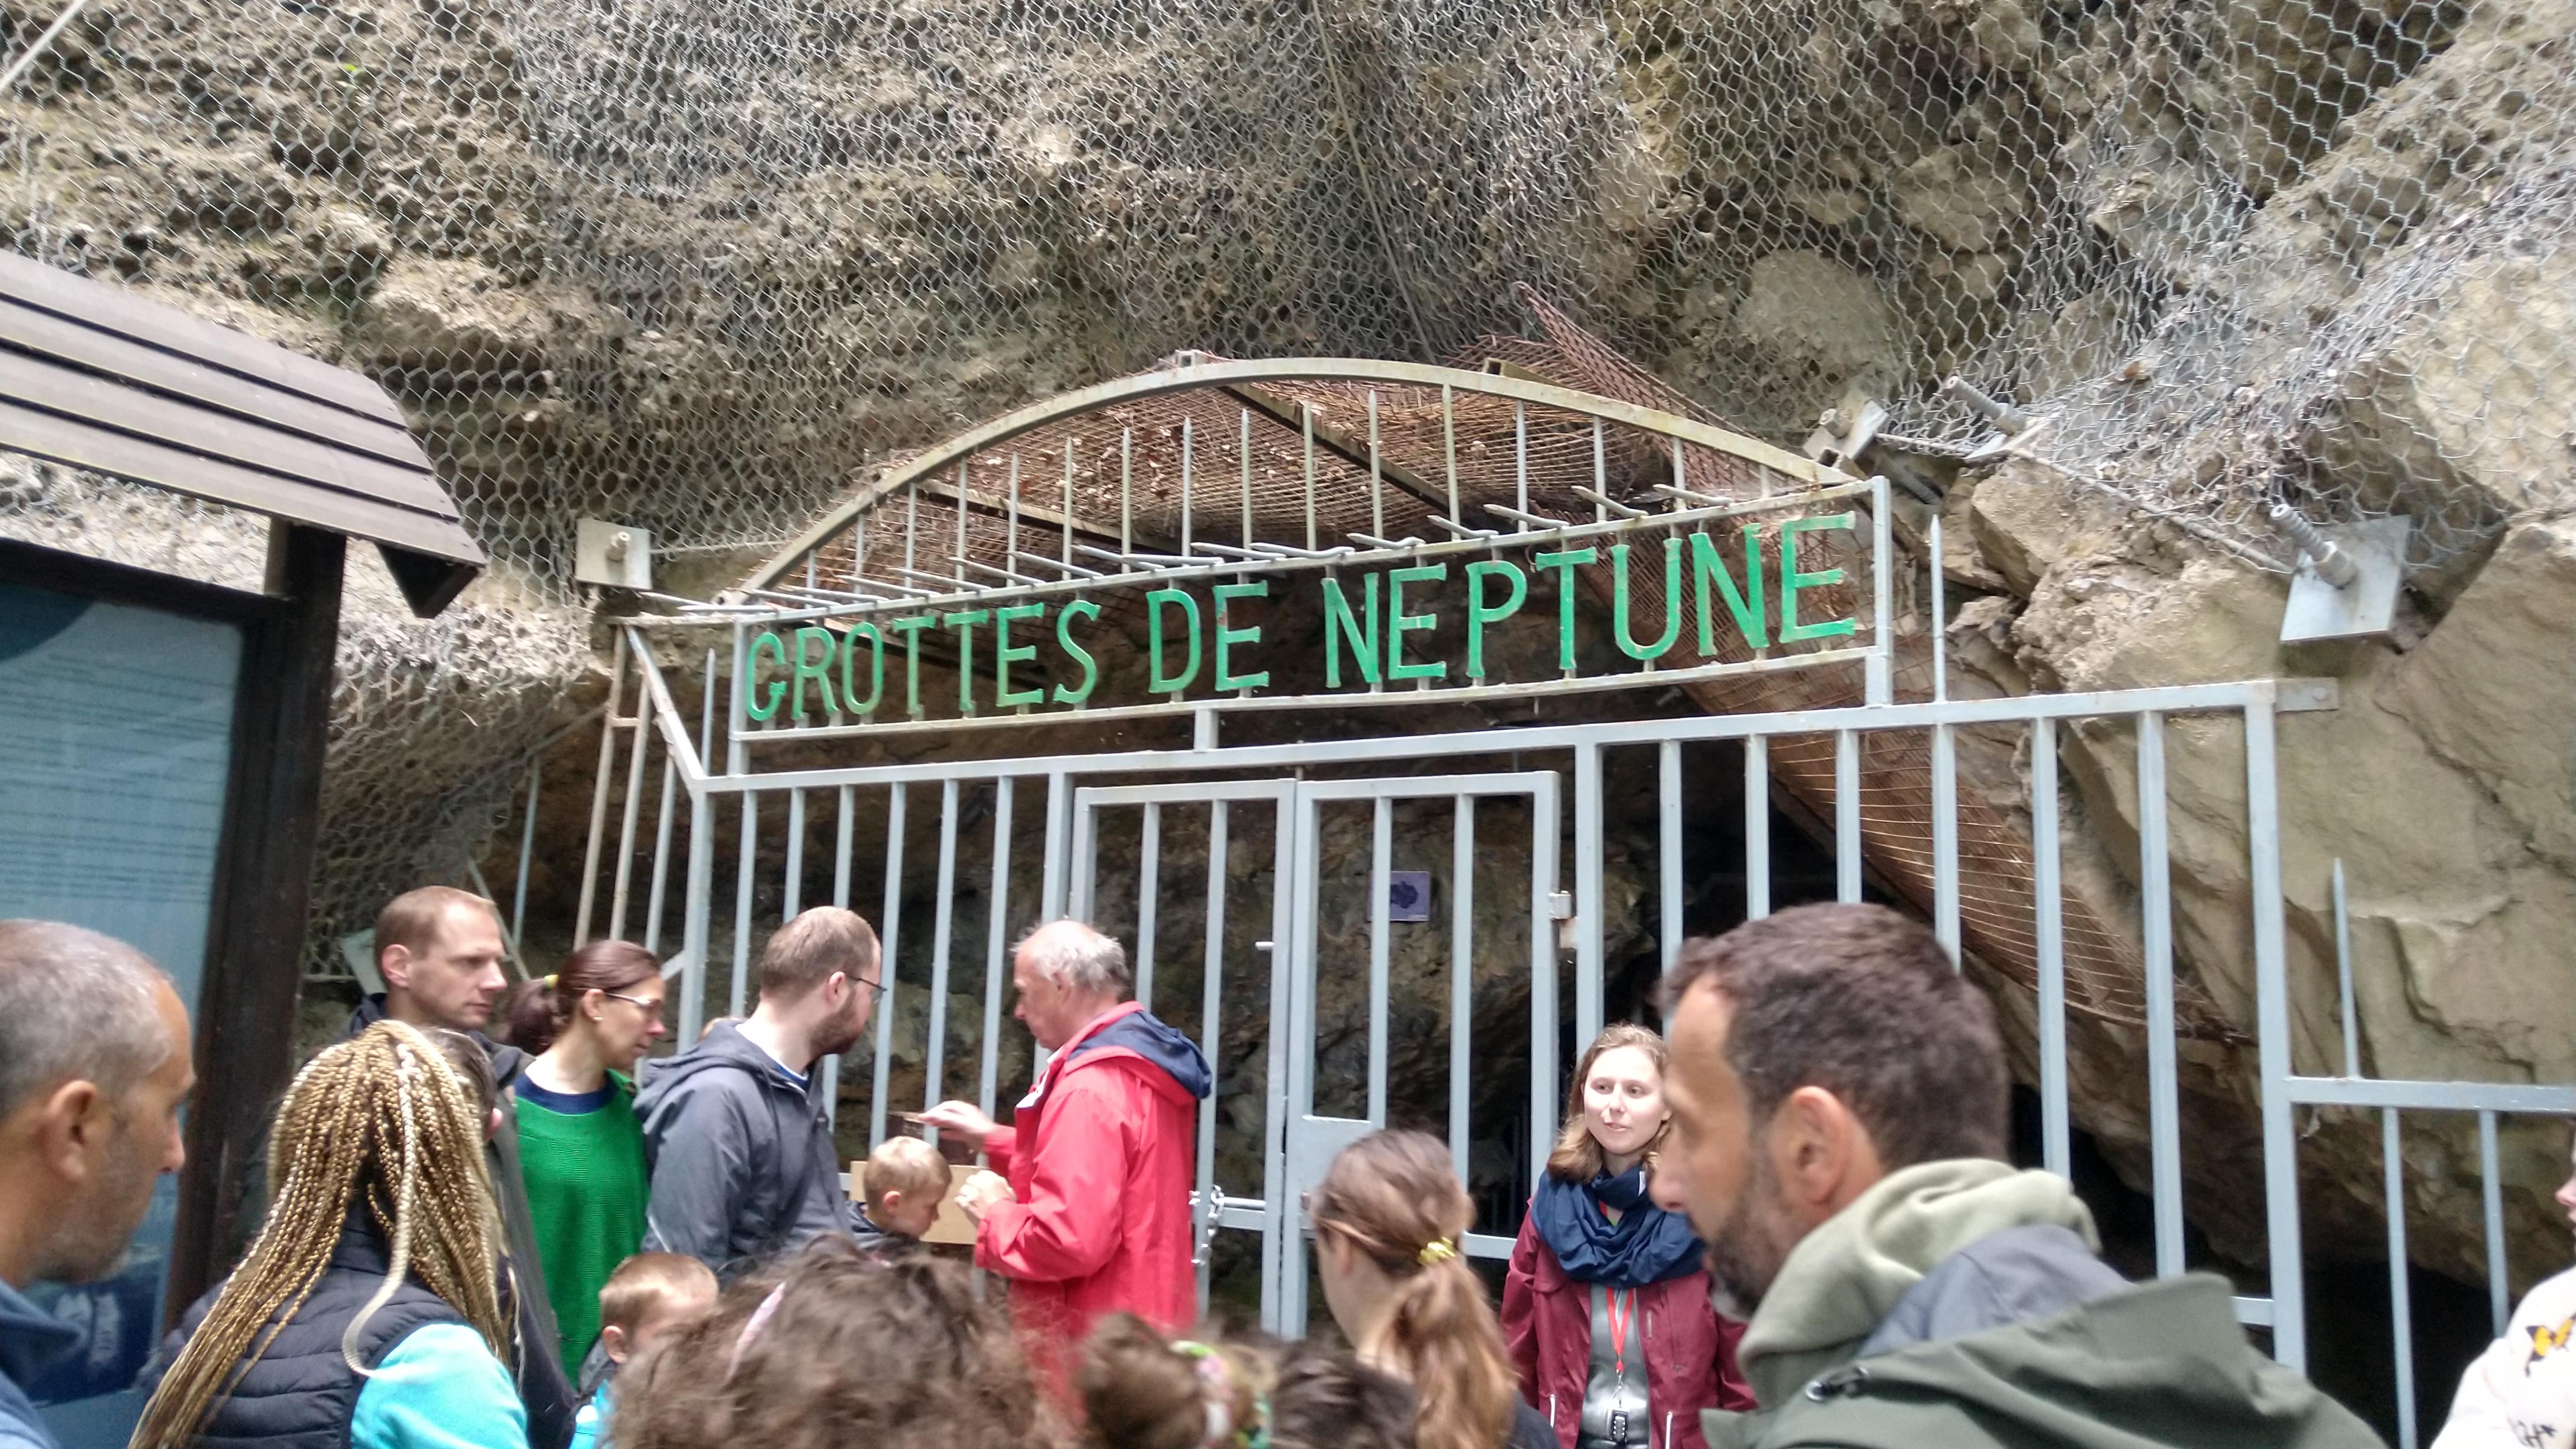 ingang Grottes De Neptune